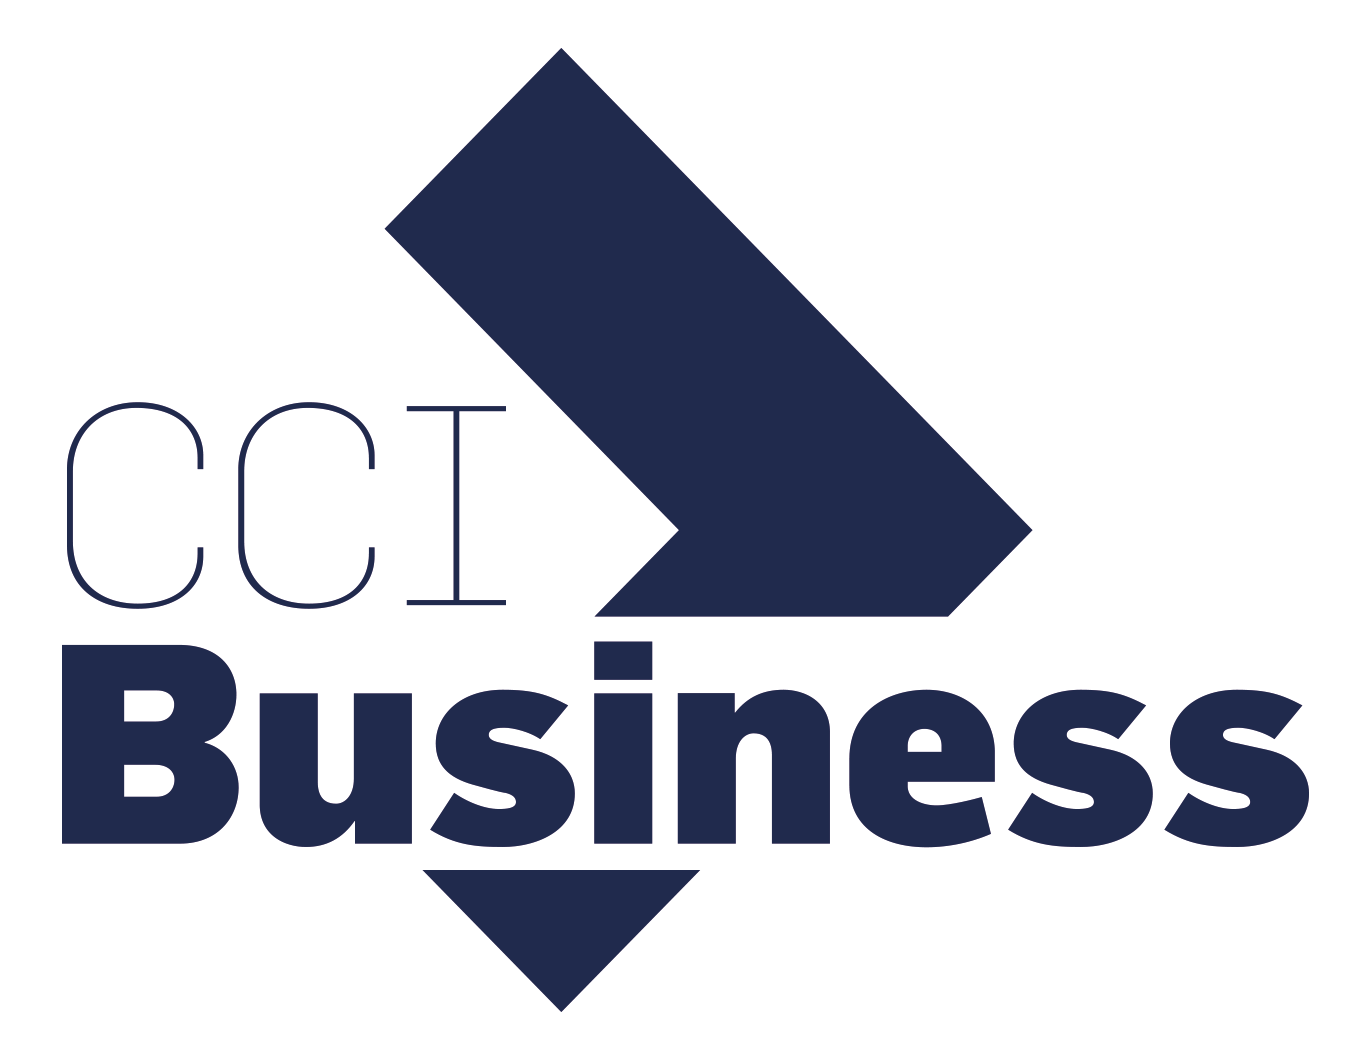 CCI Business